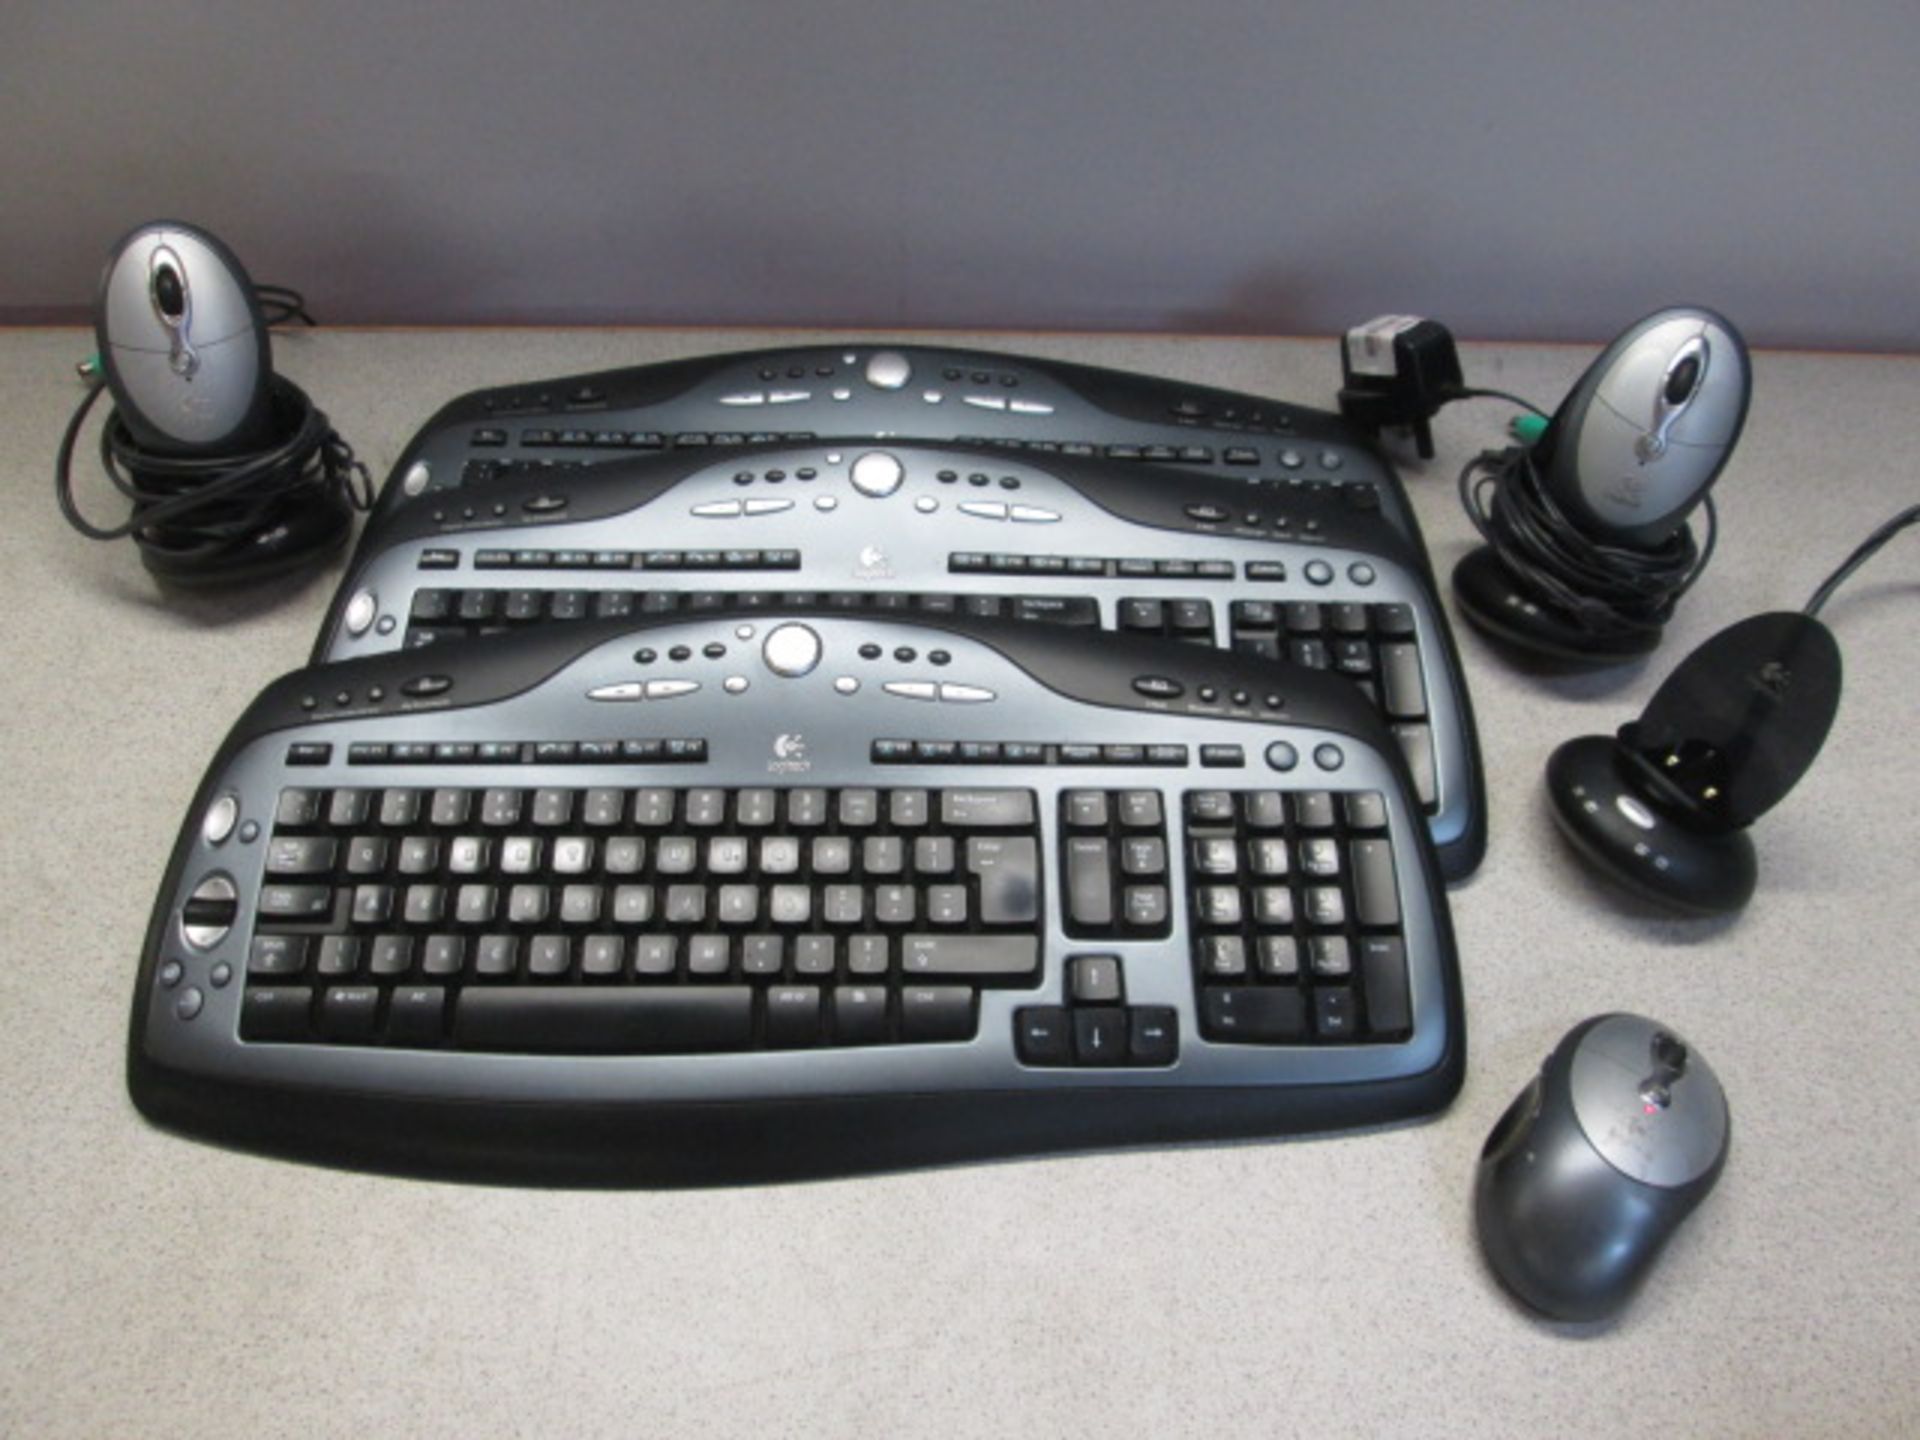 3 x Logitech Cordless Keyboards, Model Canada 10 & 3 x Logitech Click Plus Optical Mouse, Model M-